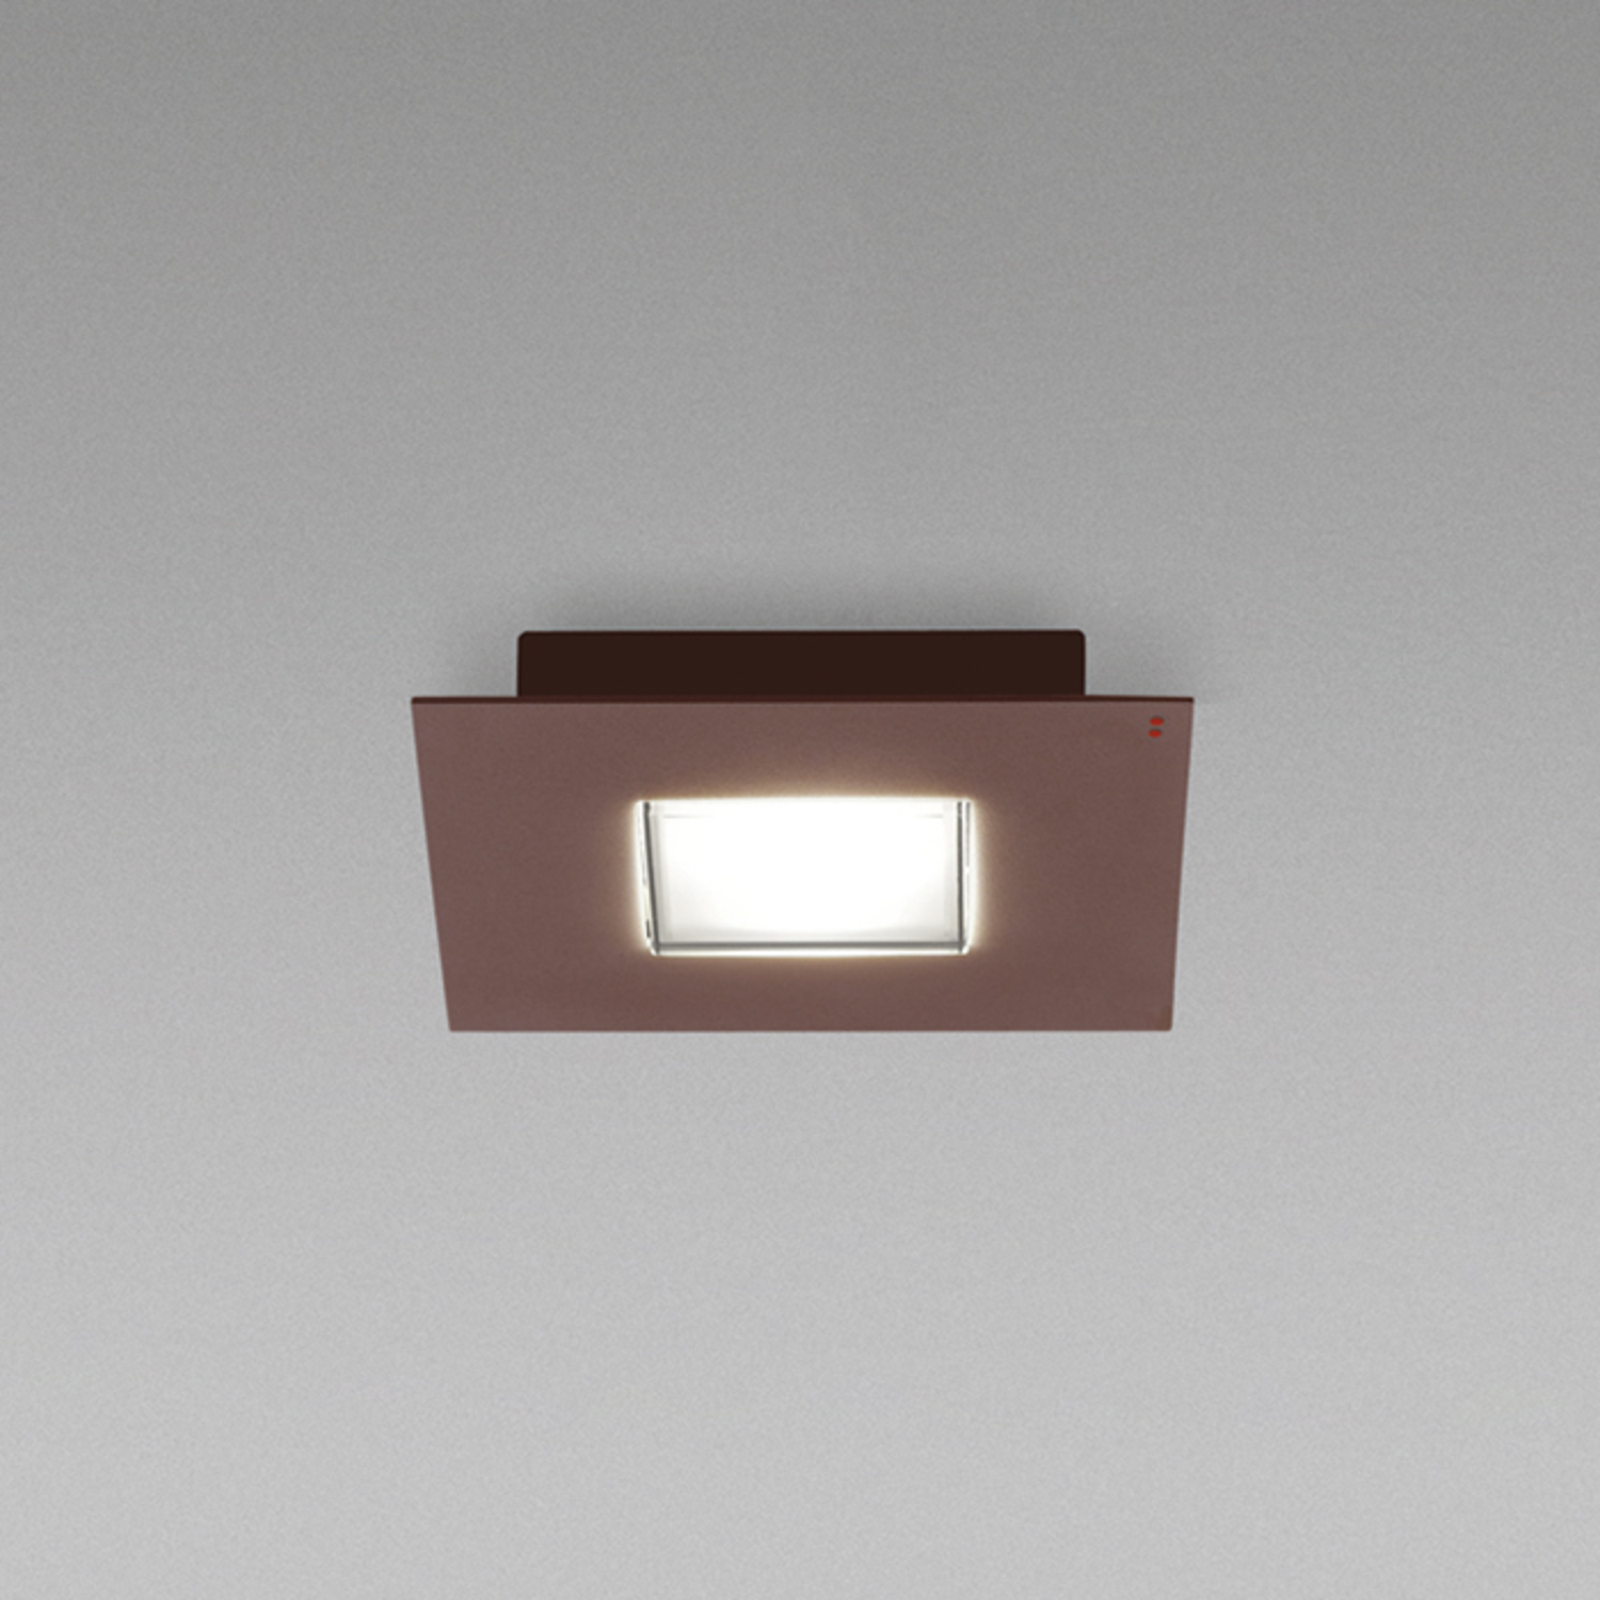 Quarter - een LED plafondlamp met bruine rand